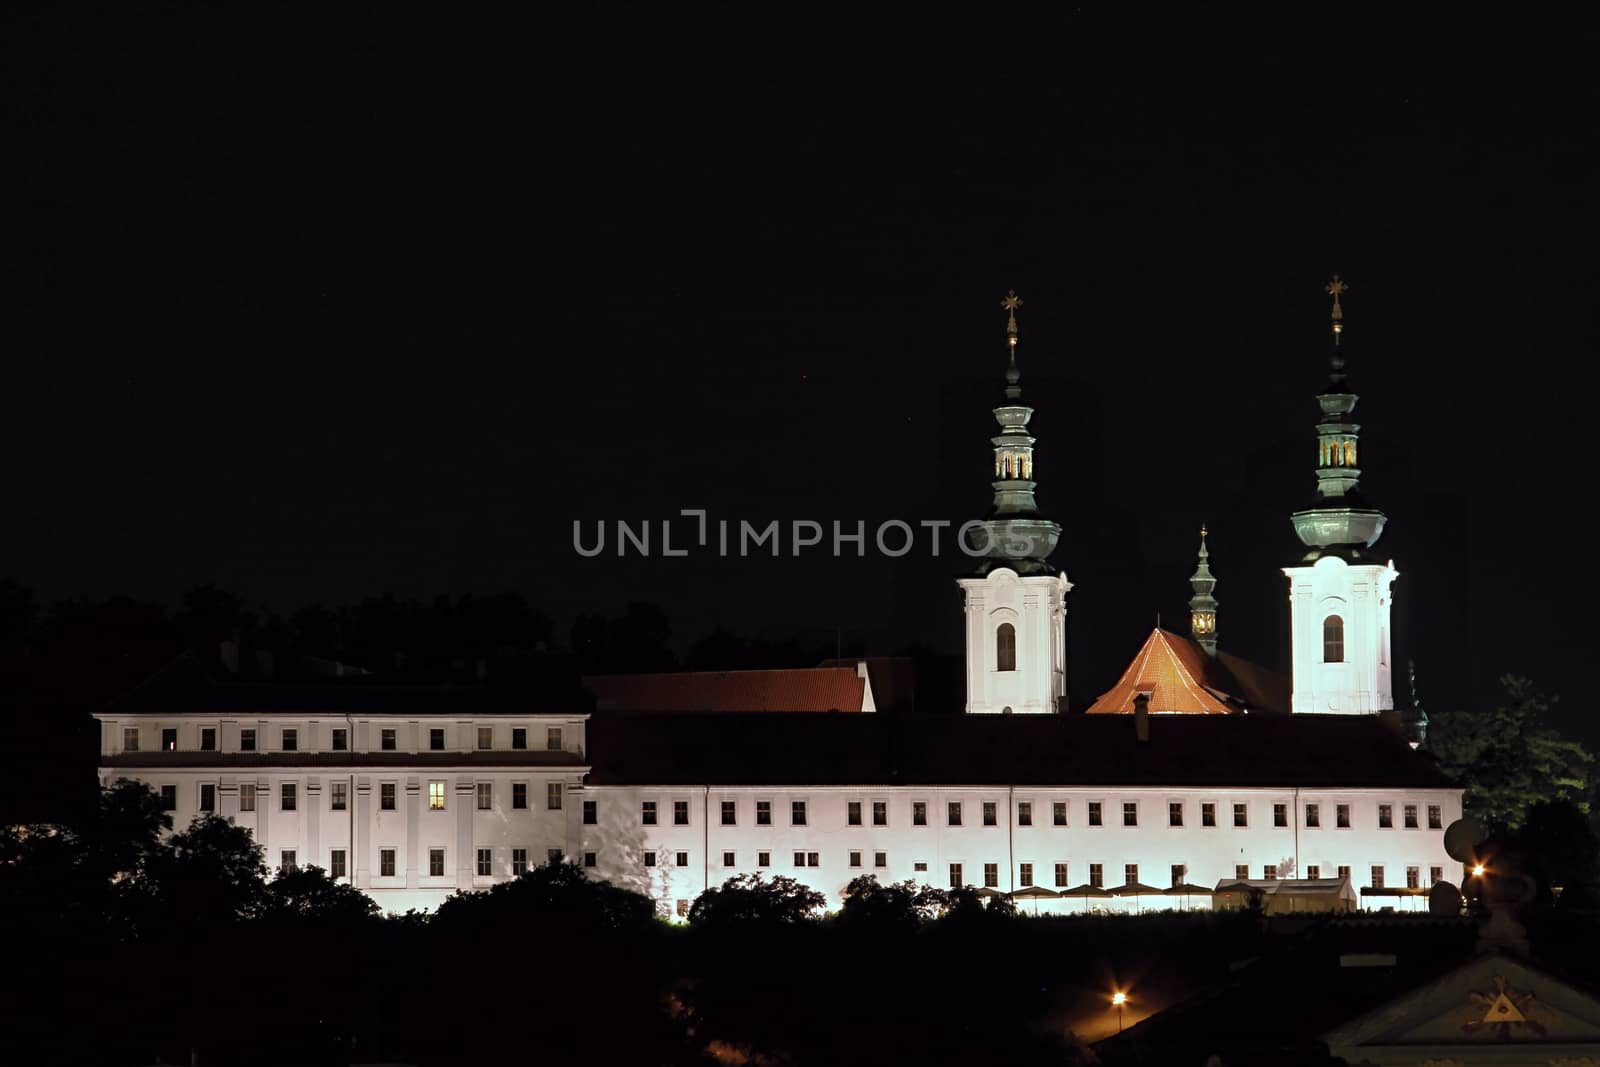 Prague view at night by Dermot68